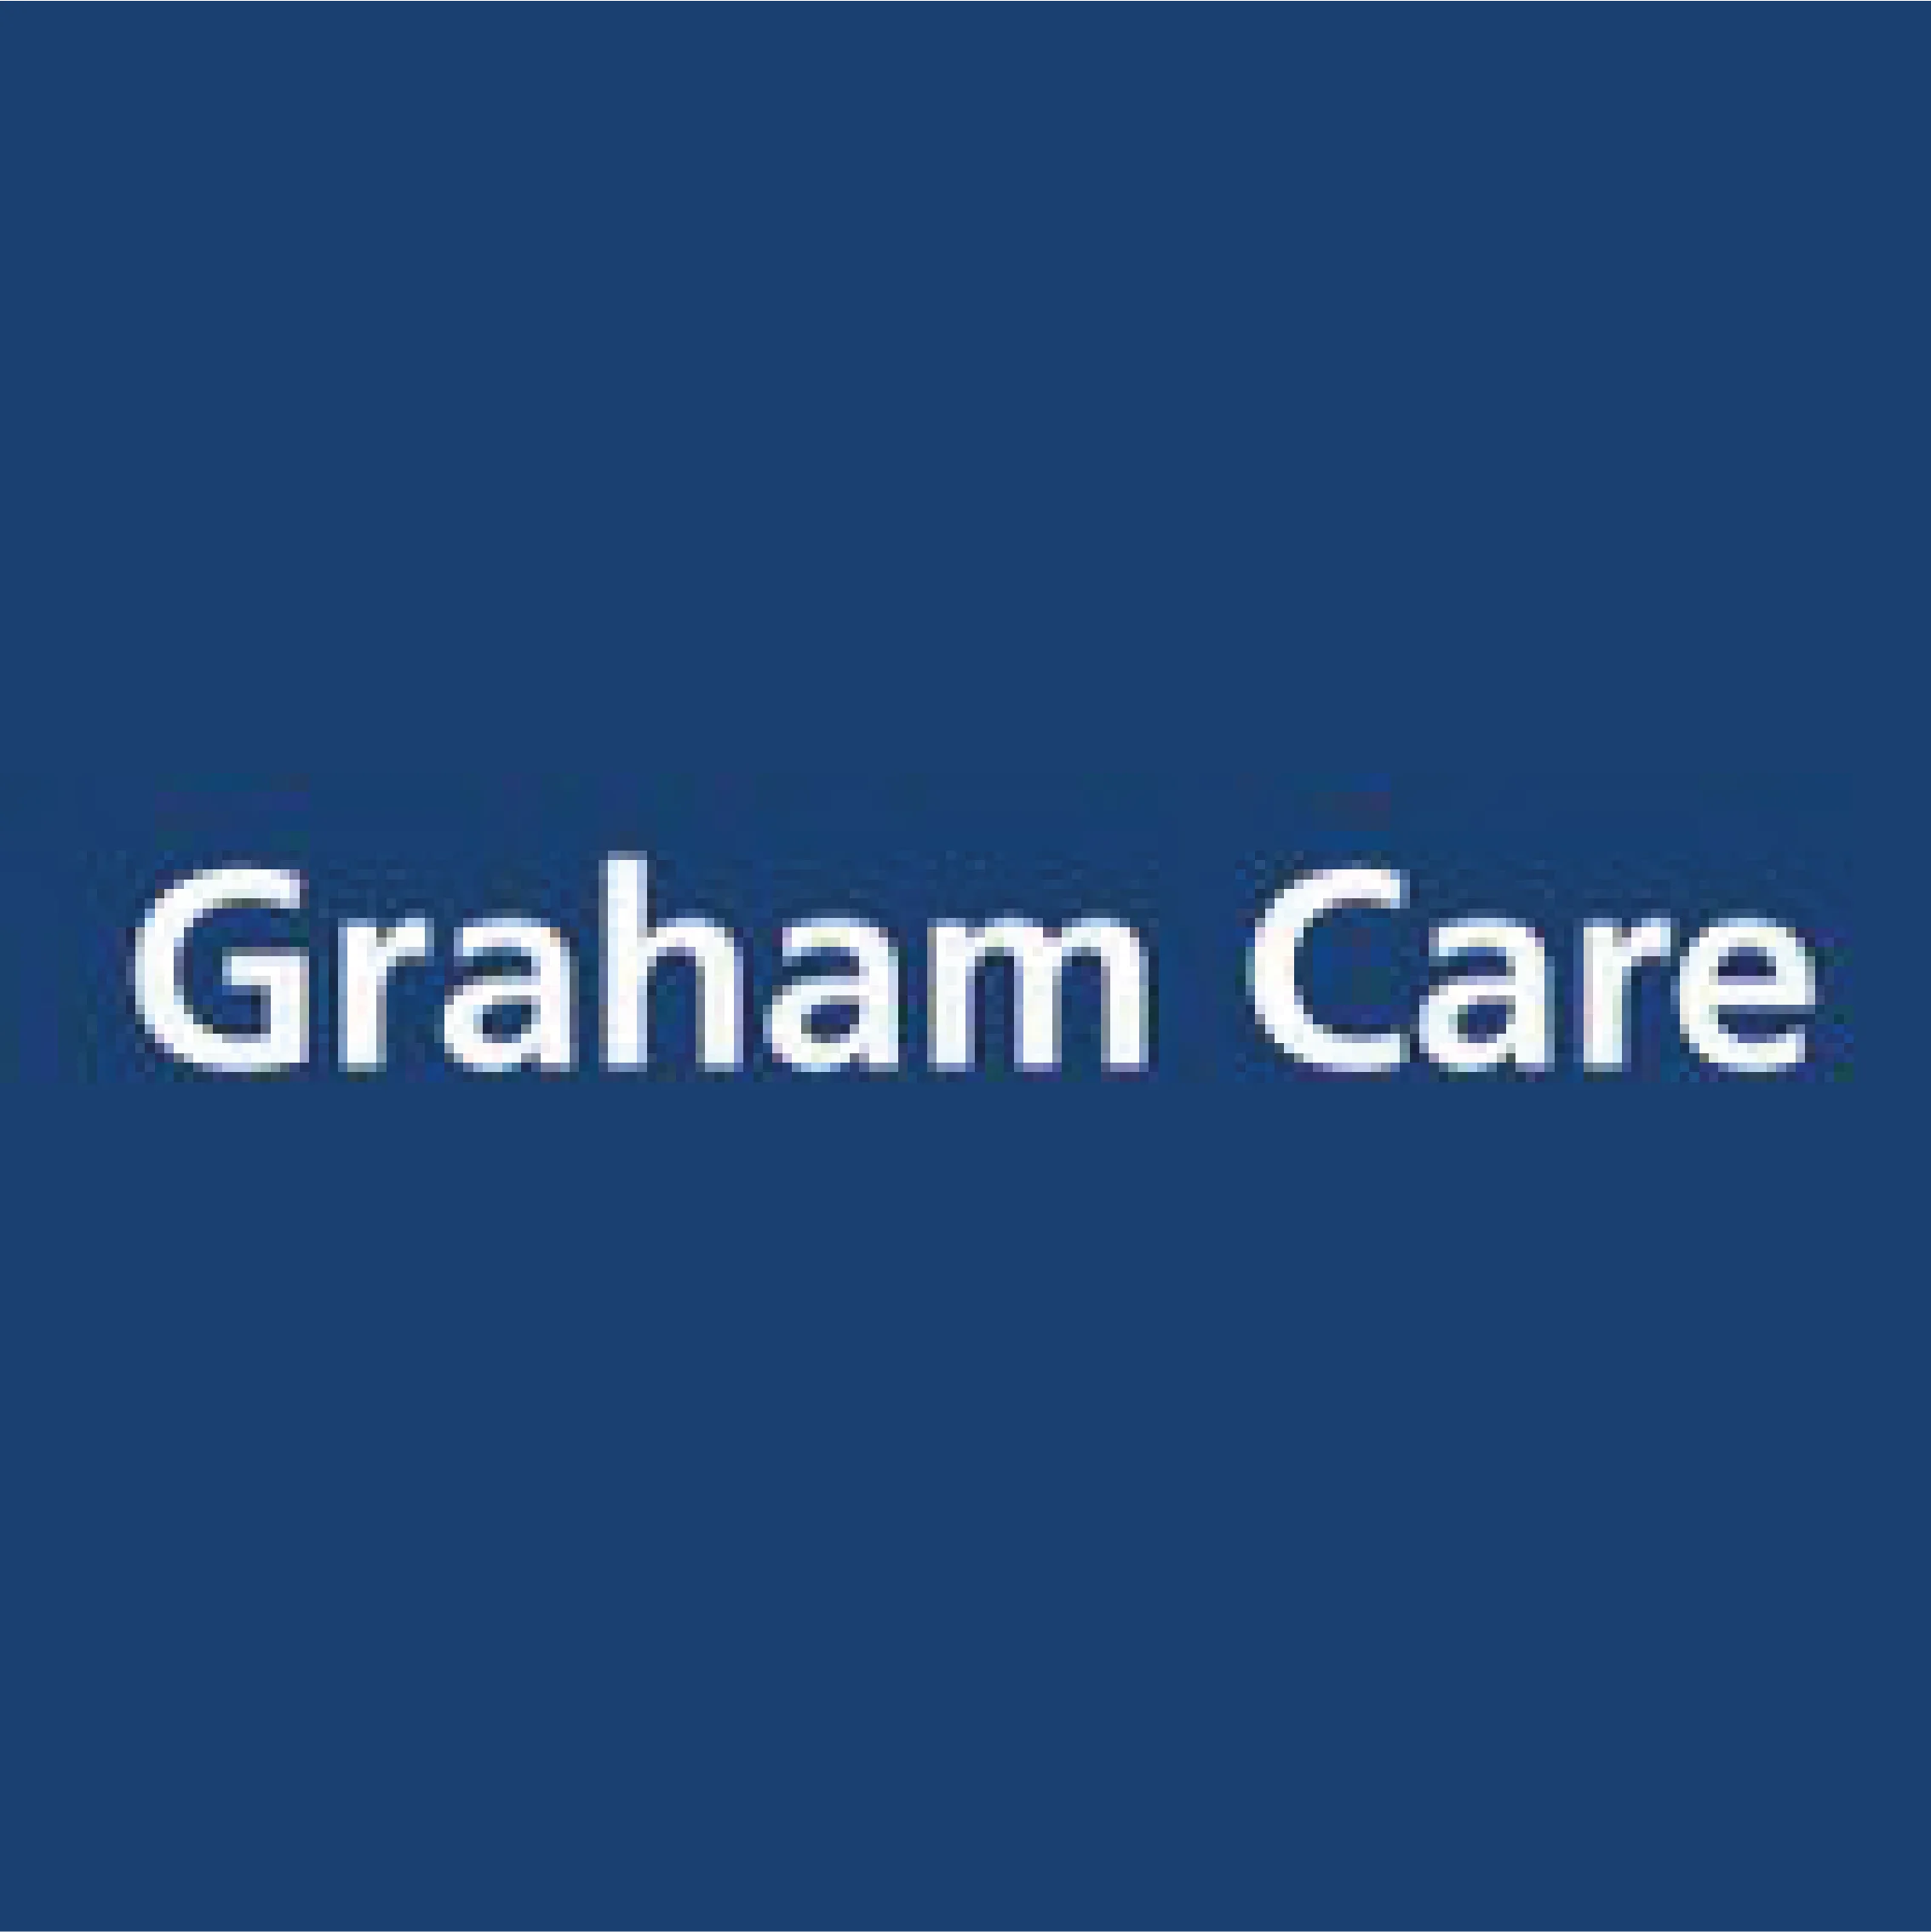 Graham Care 1x1